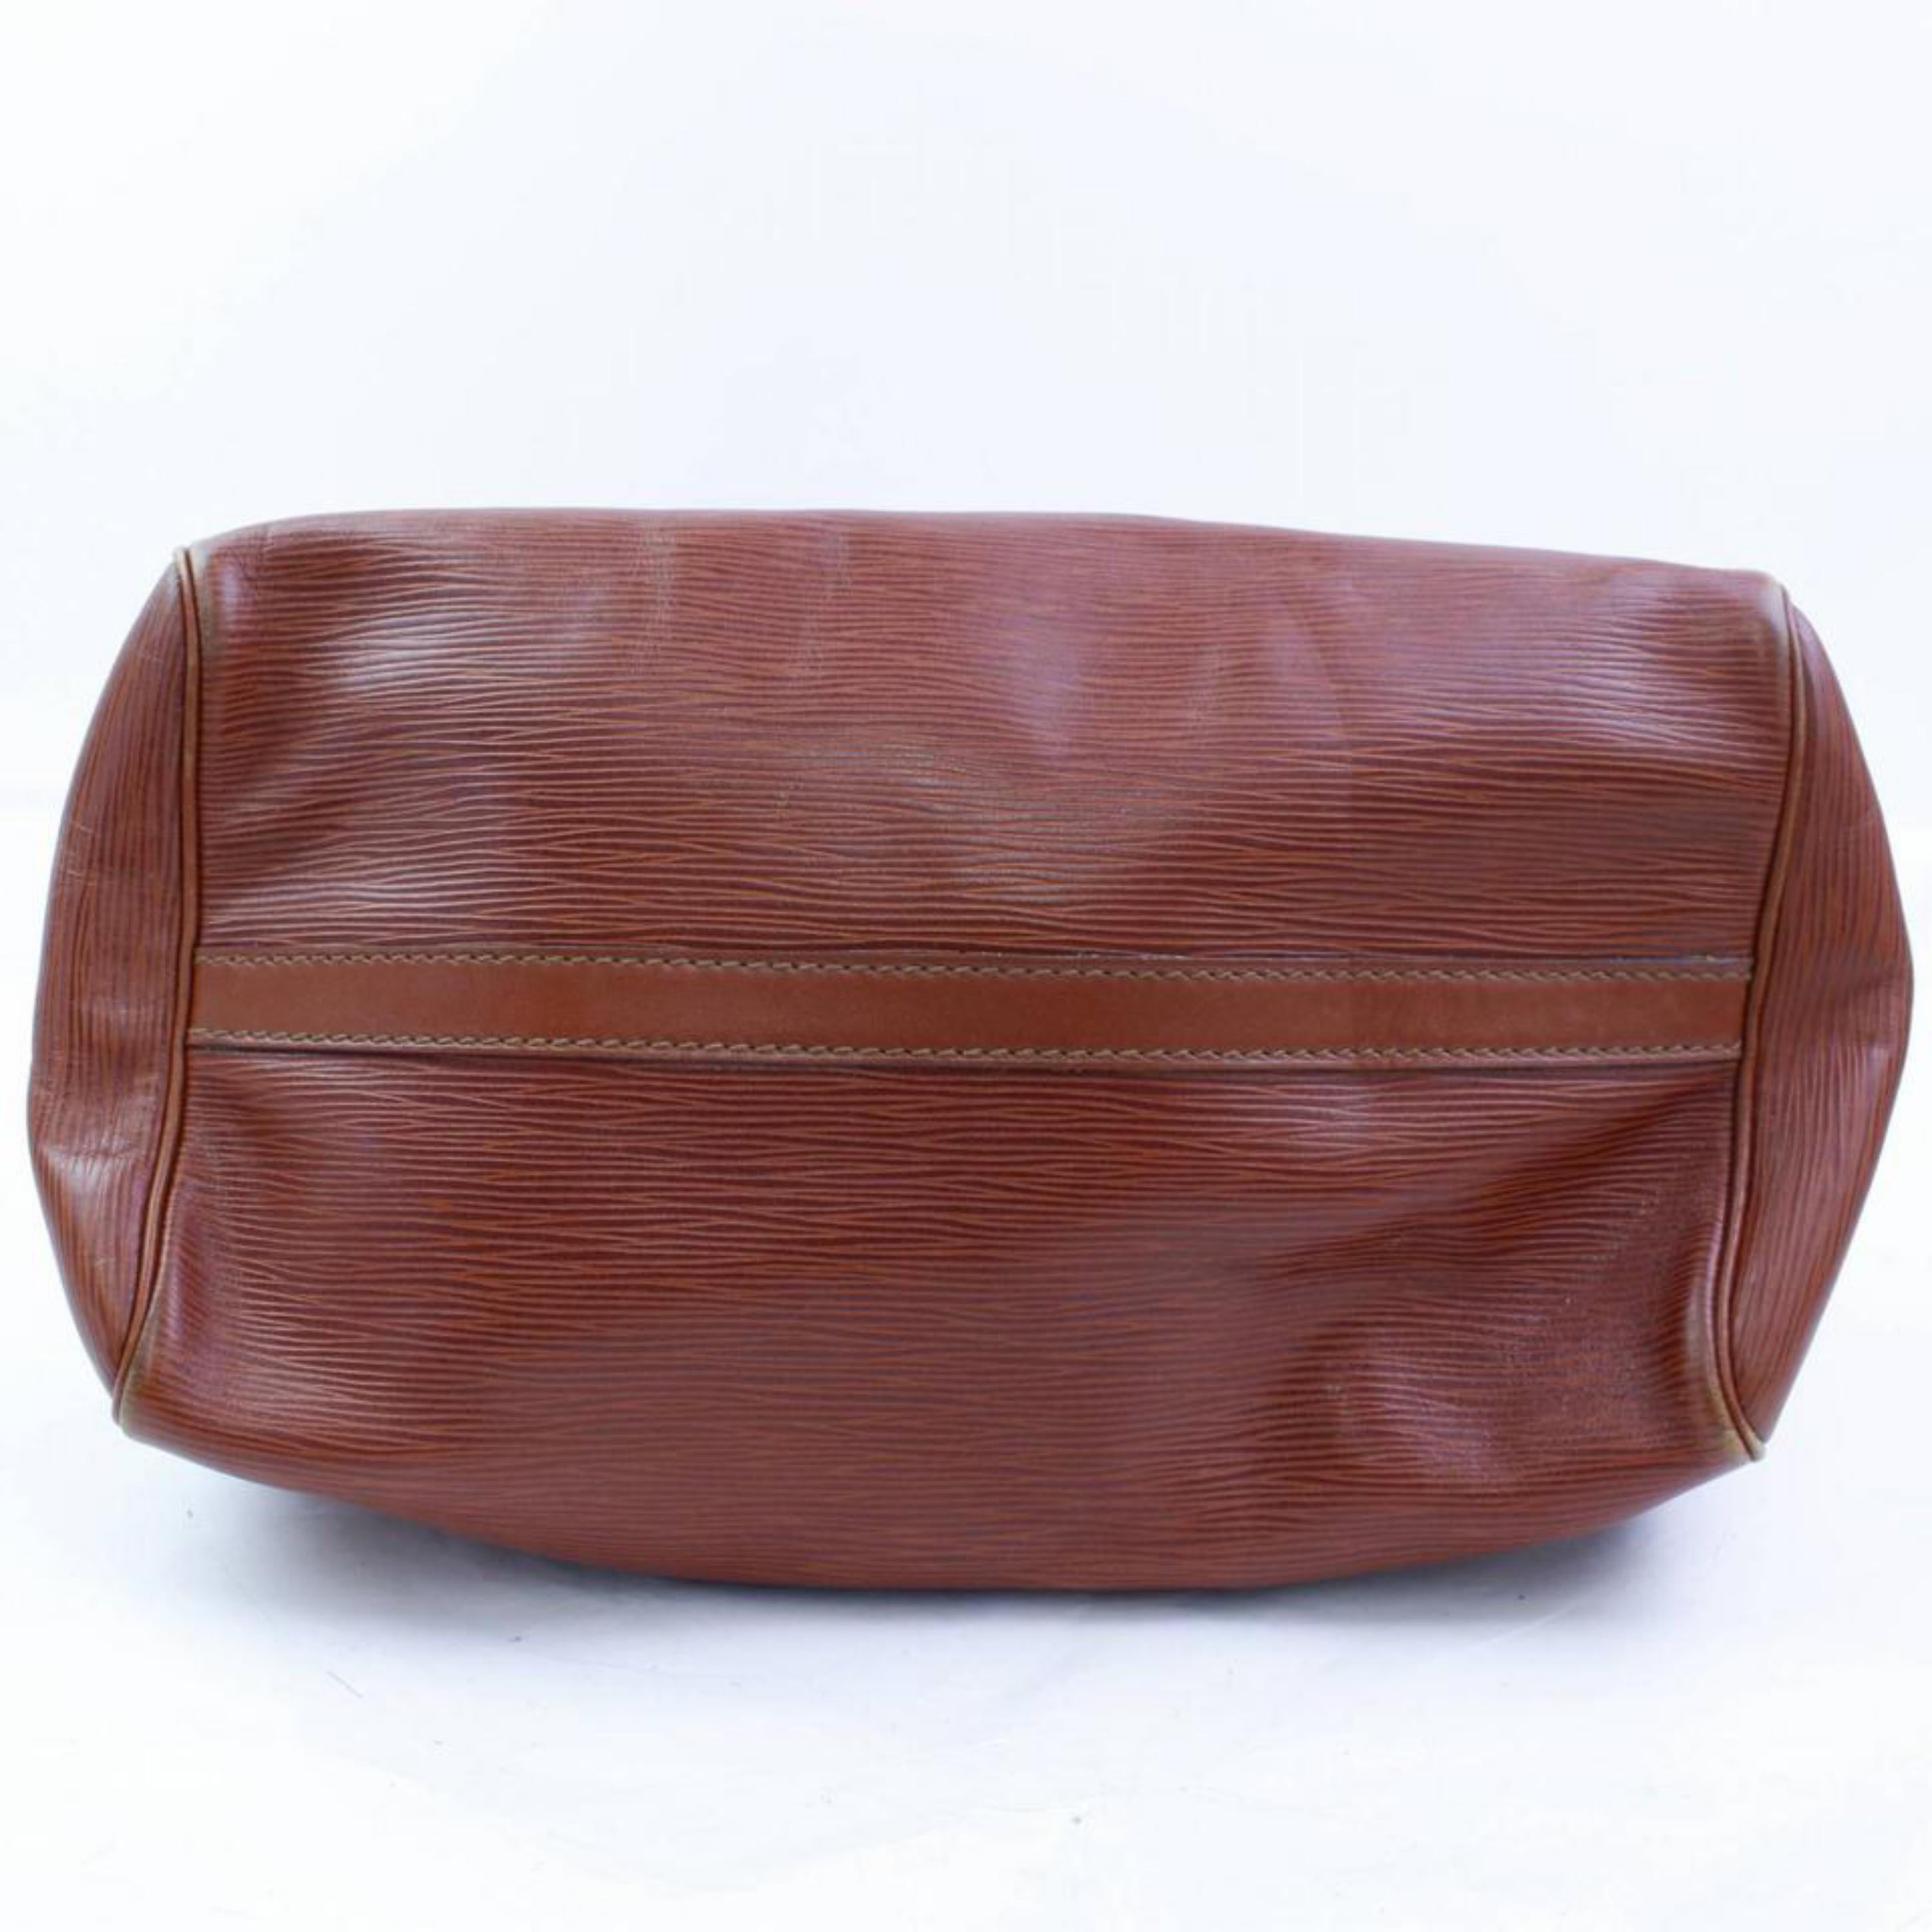 Louis Vuitton Speedy Kenya 30 866818 Brown Leather Satchel For Sale 4